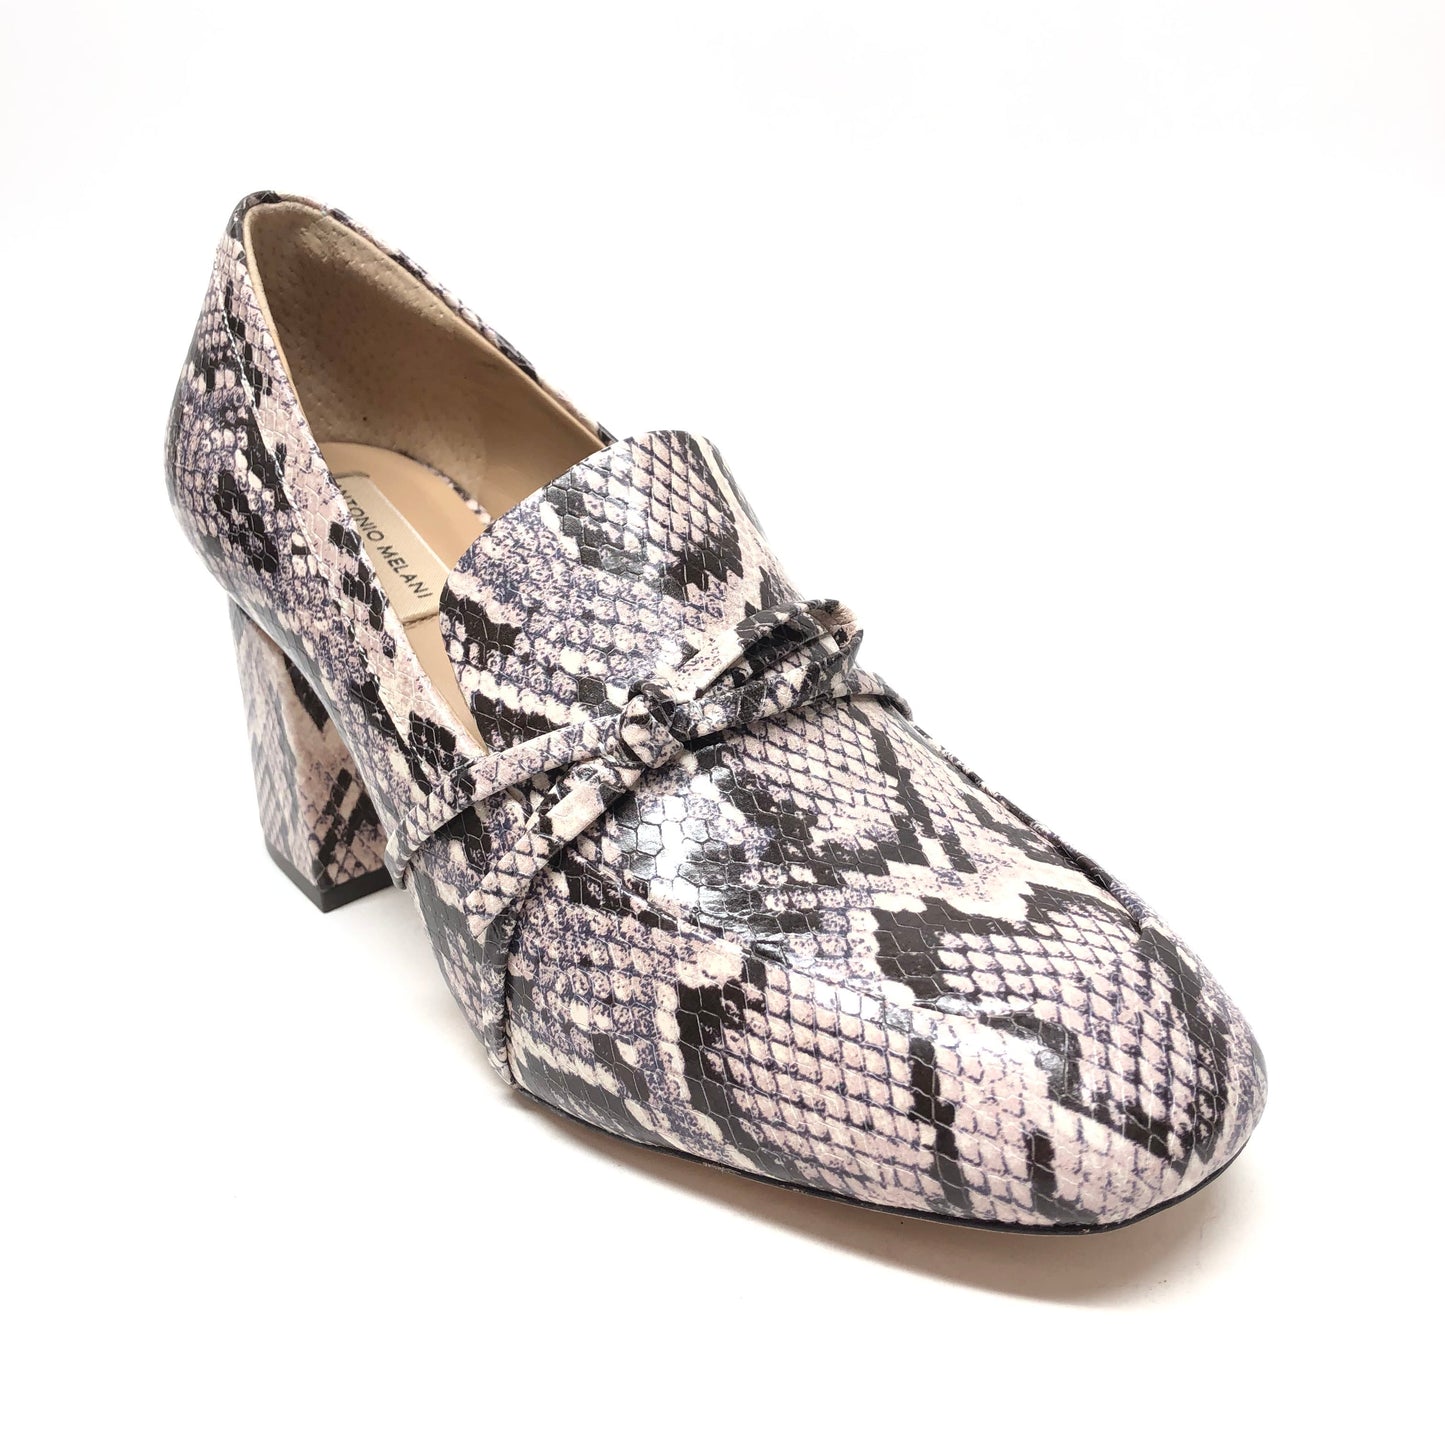 Snakeskin Print Shoes Heels Block Antonio Melani, Size 10